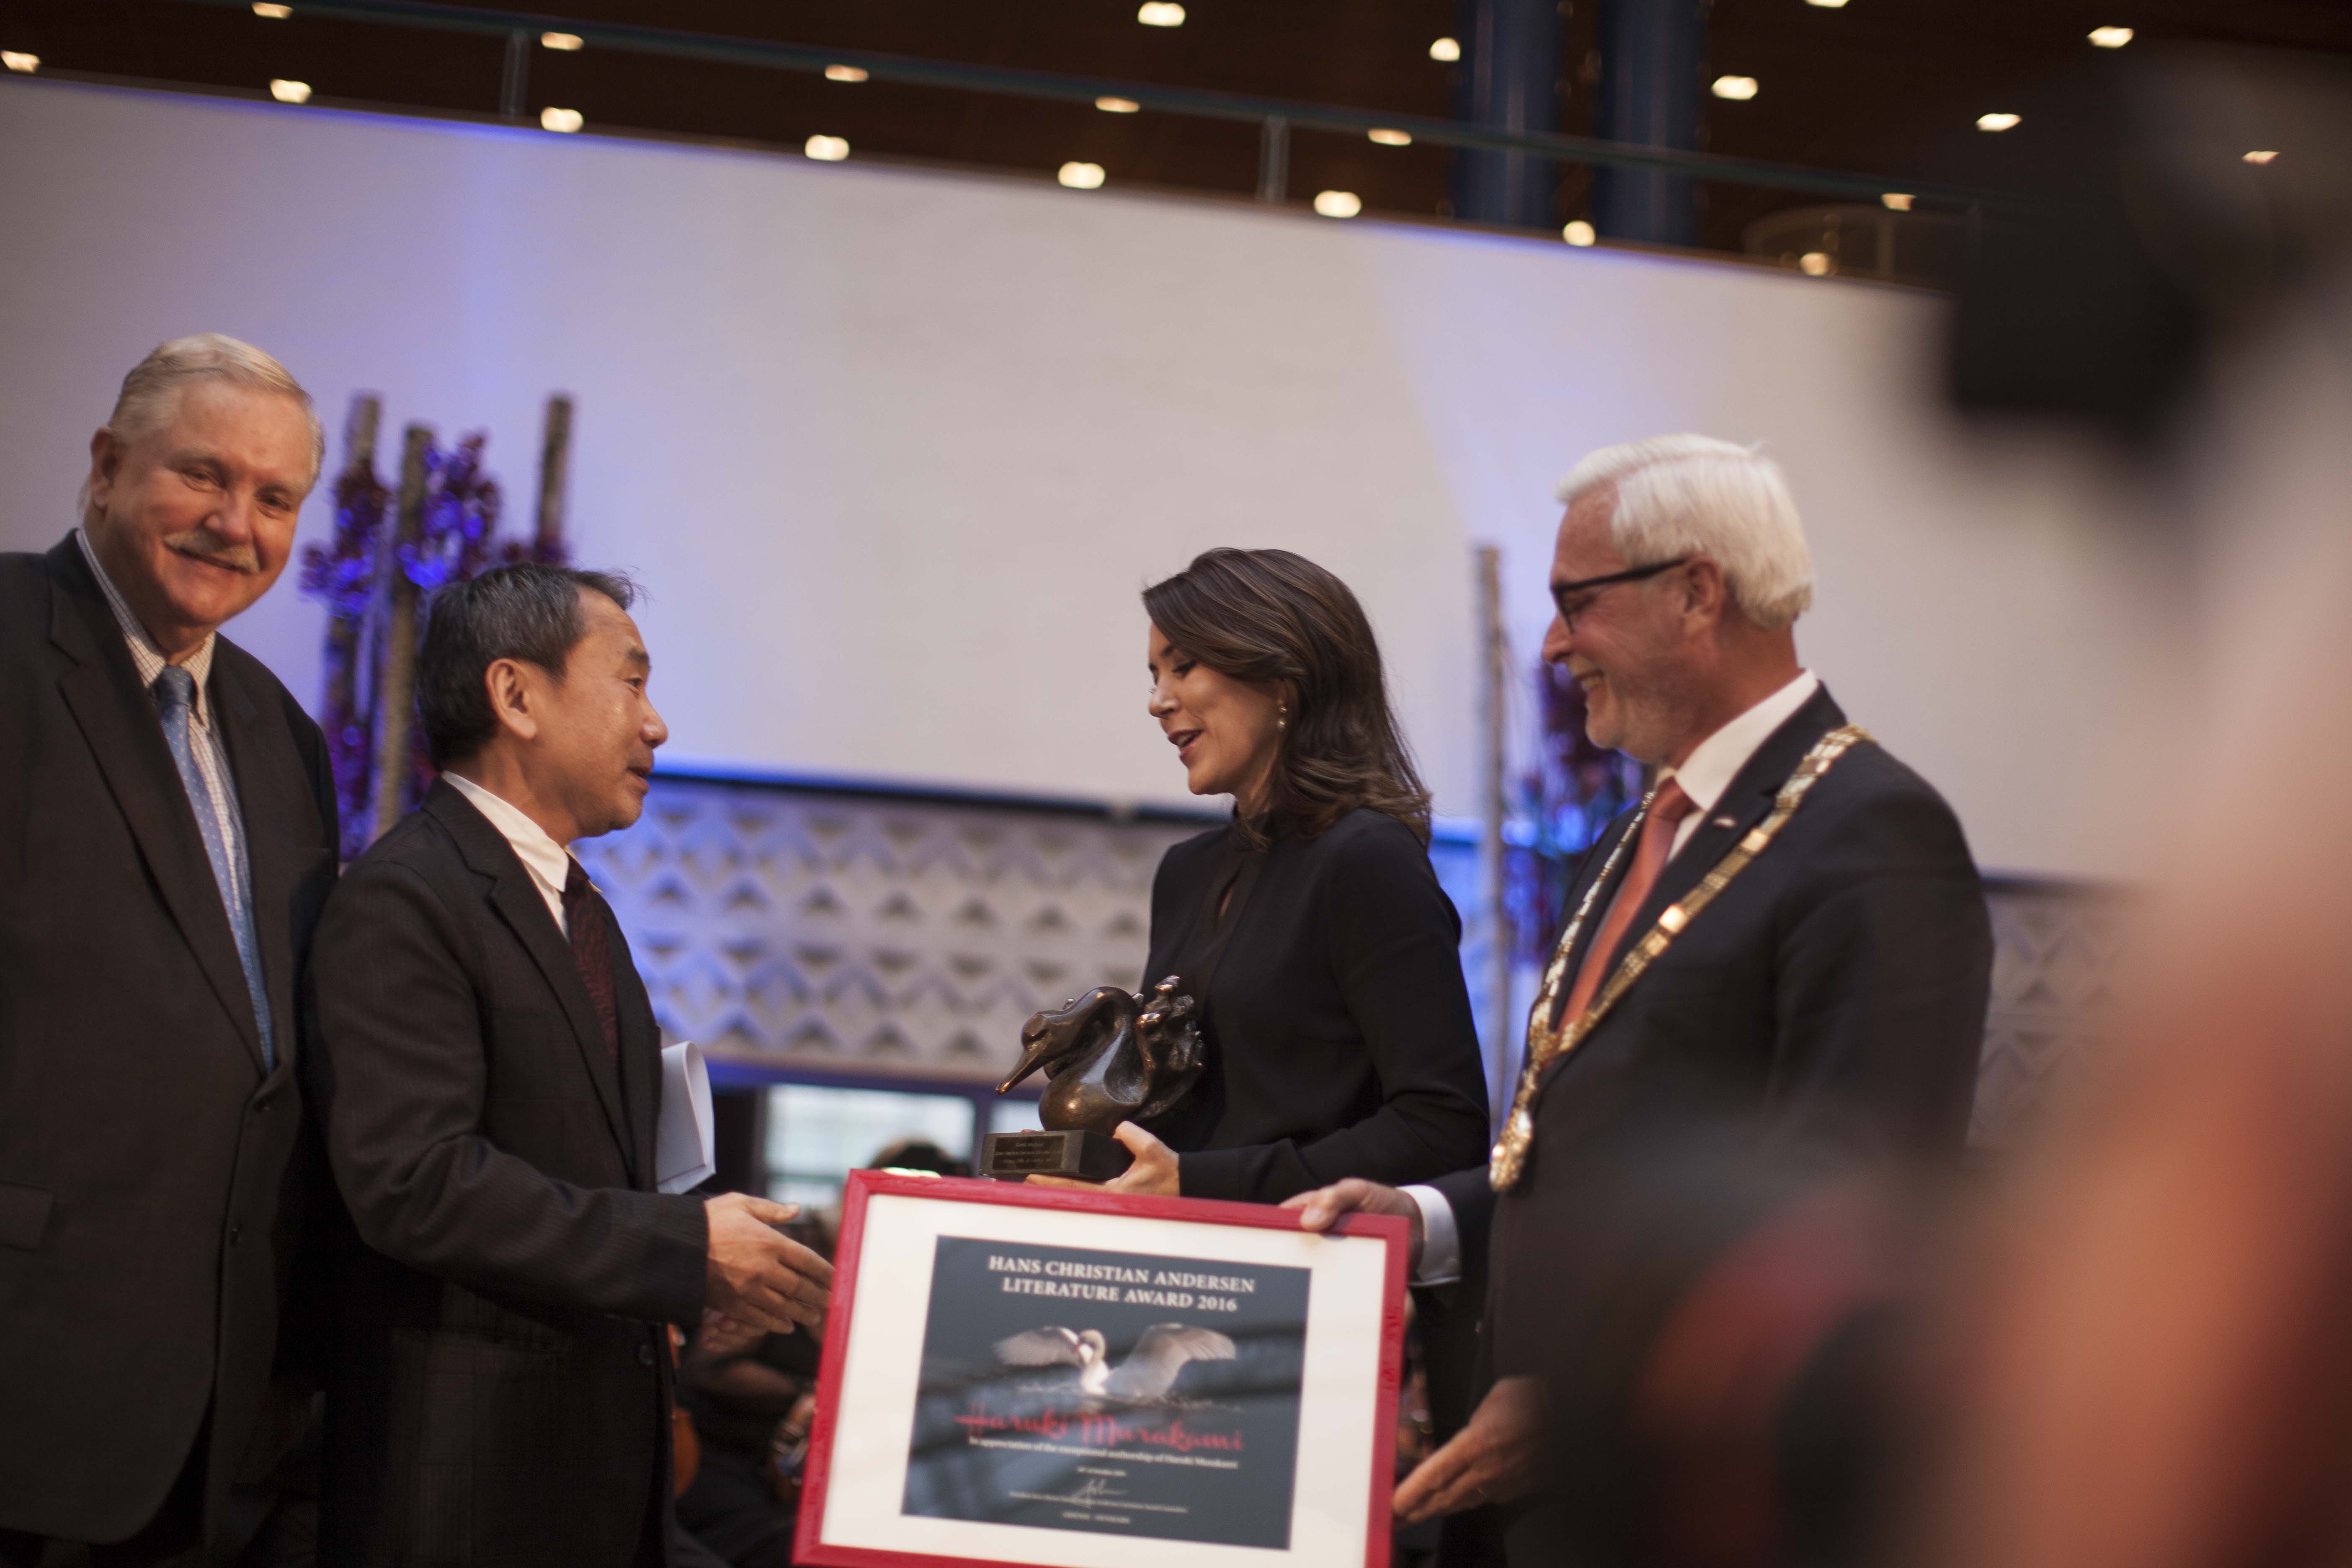 Odense honours Haruki Murakami with Hans Christian Andersen award